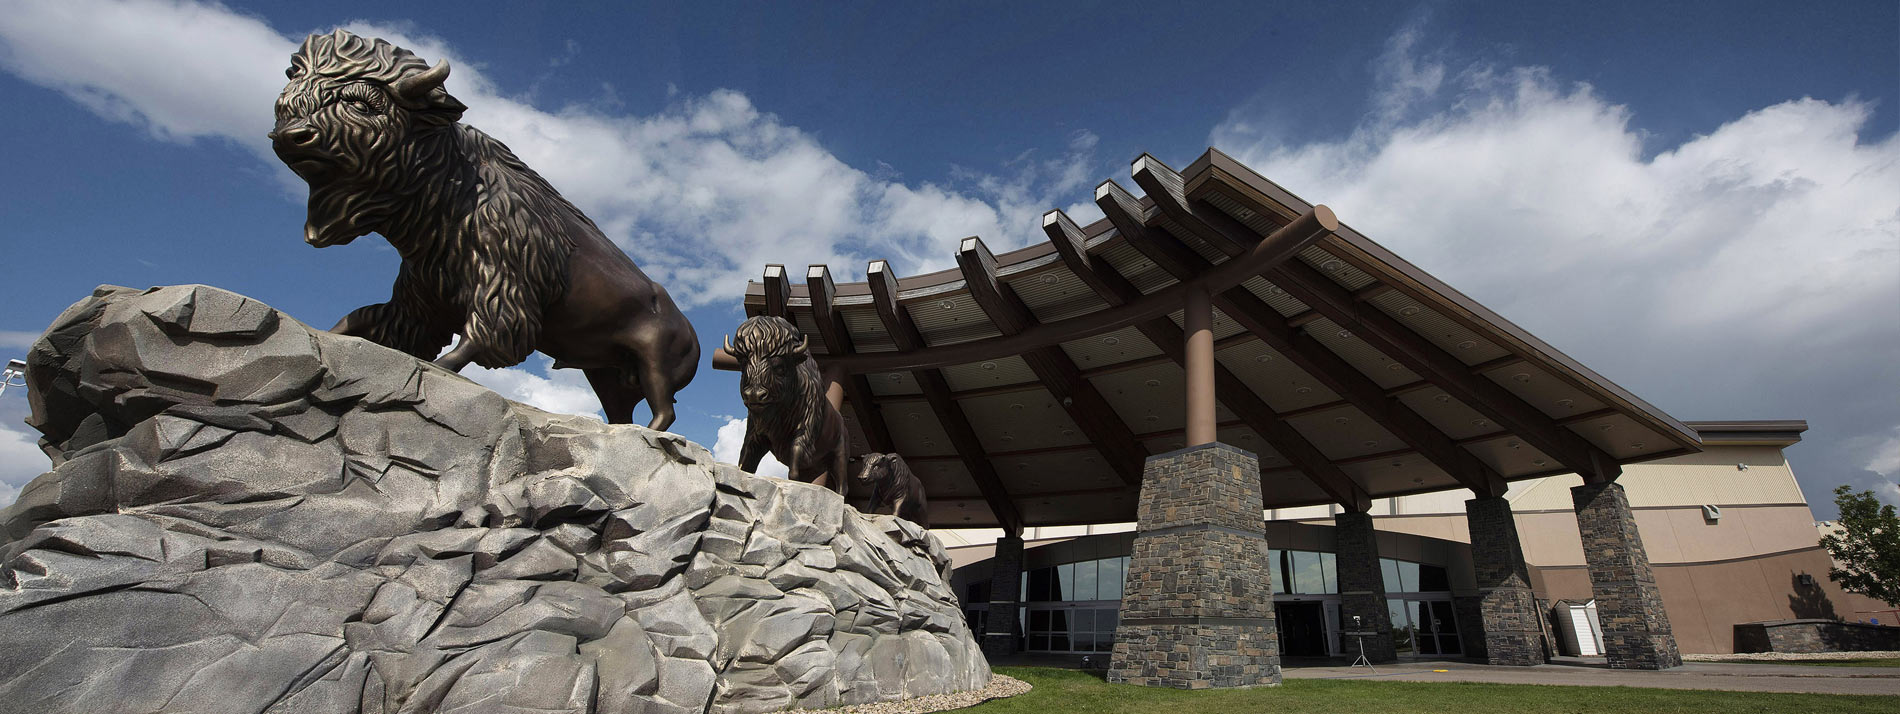 Dakota Dunes Casino entrance with massive buffalo statues